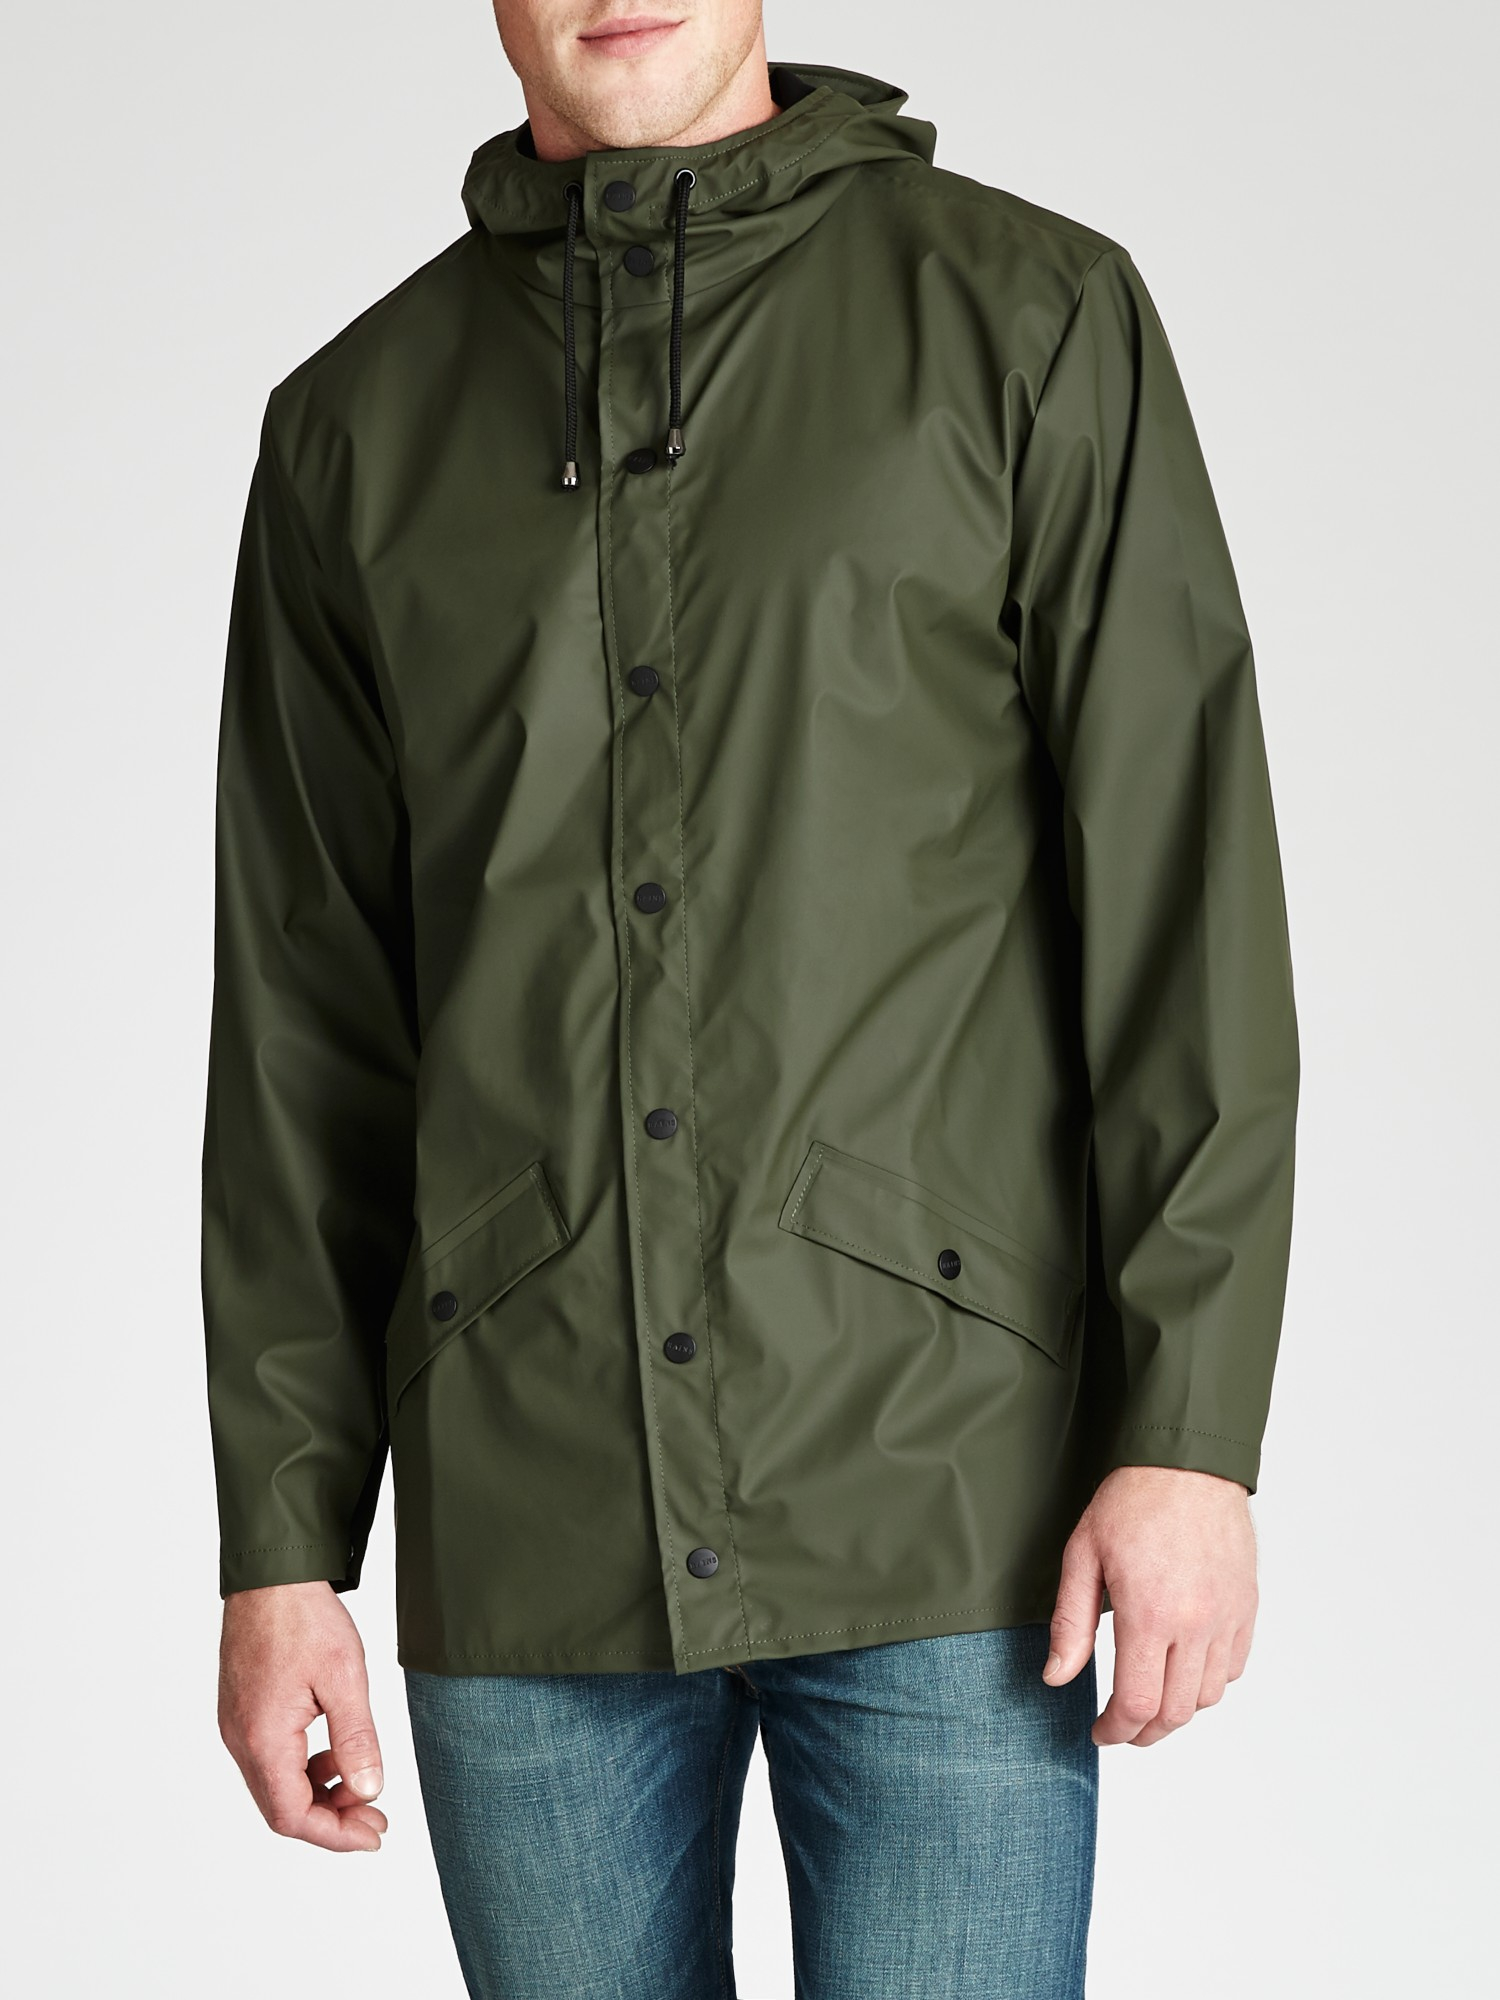 Rains Short Rain Jacket in Khaki (Green) for Men - Lyst